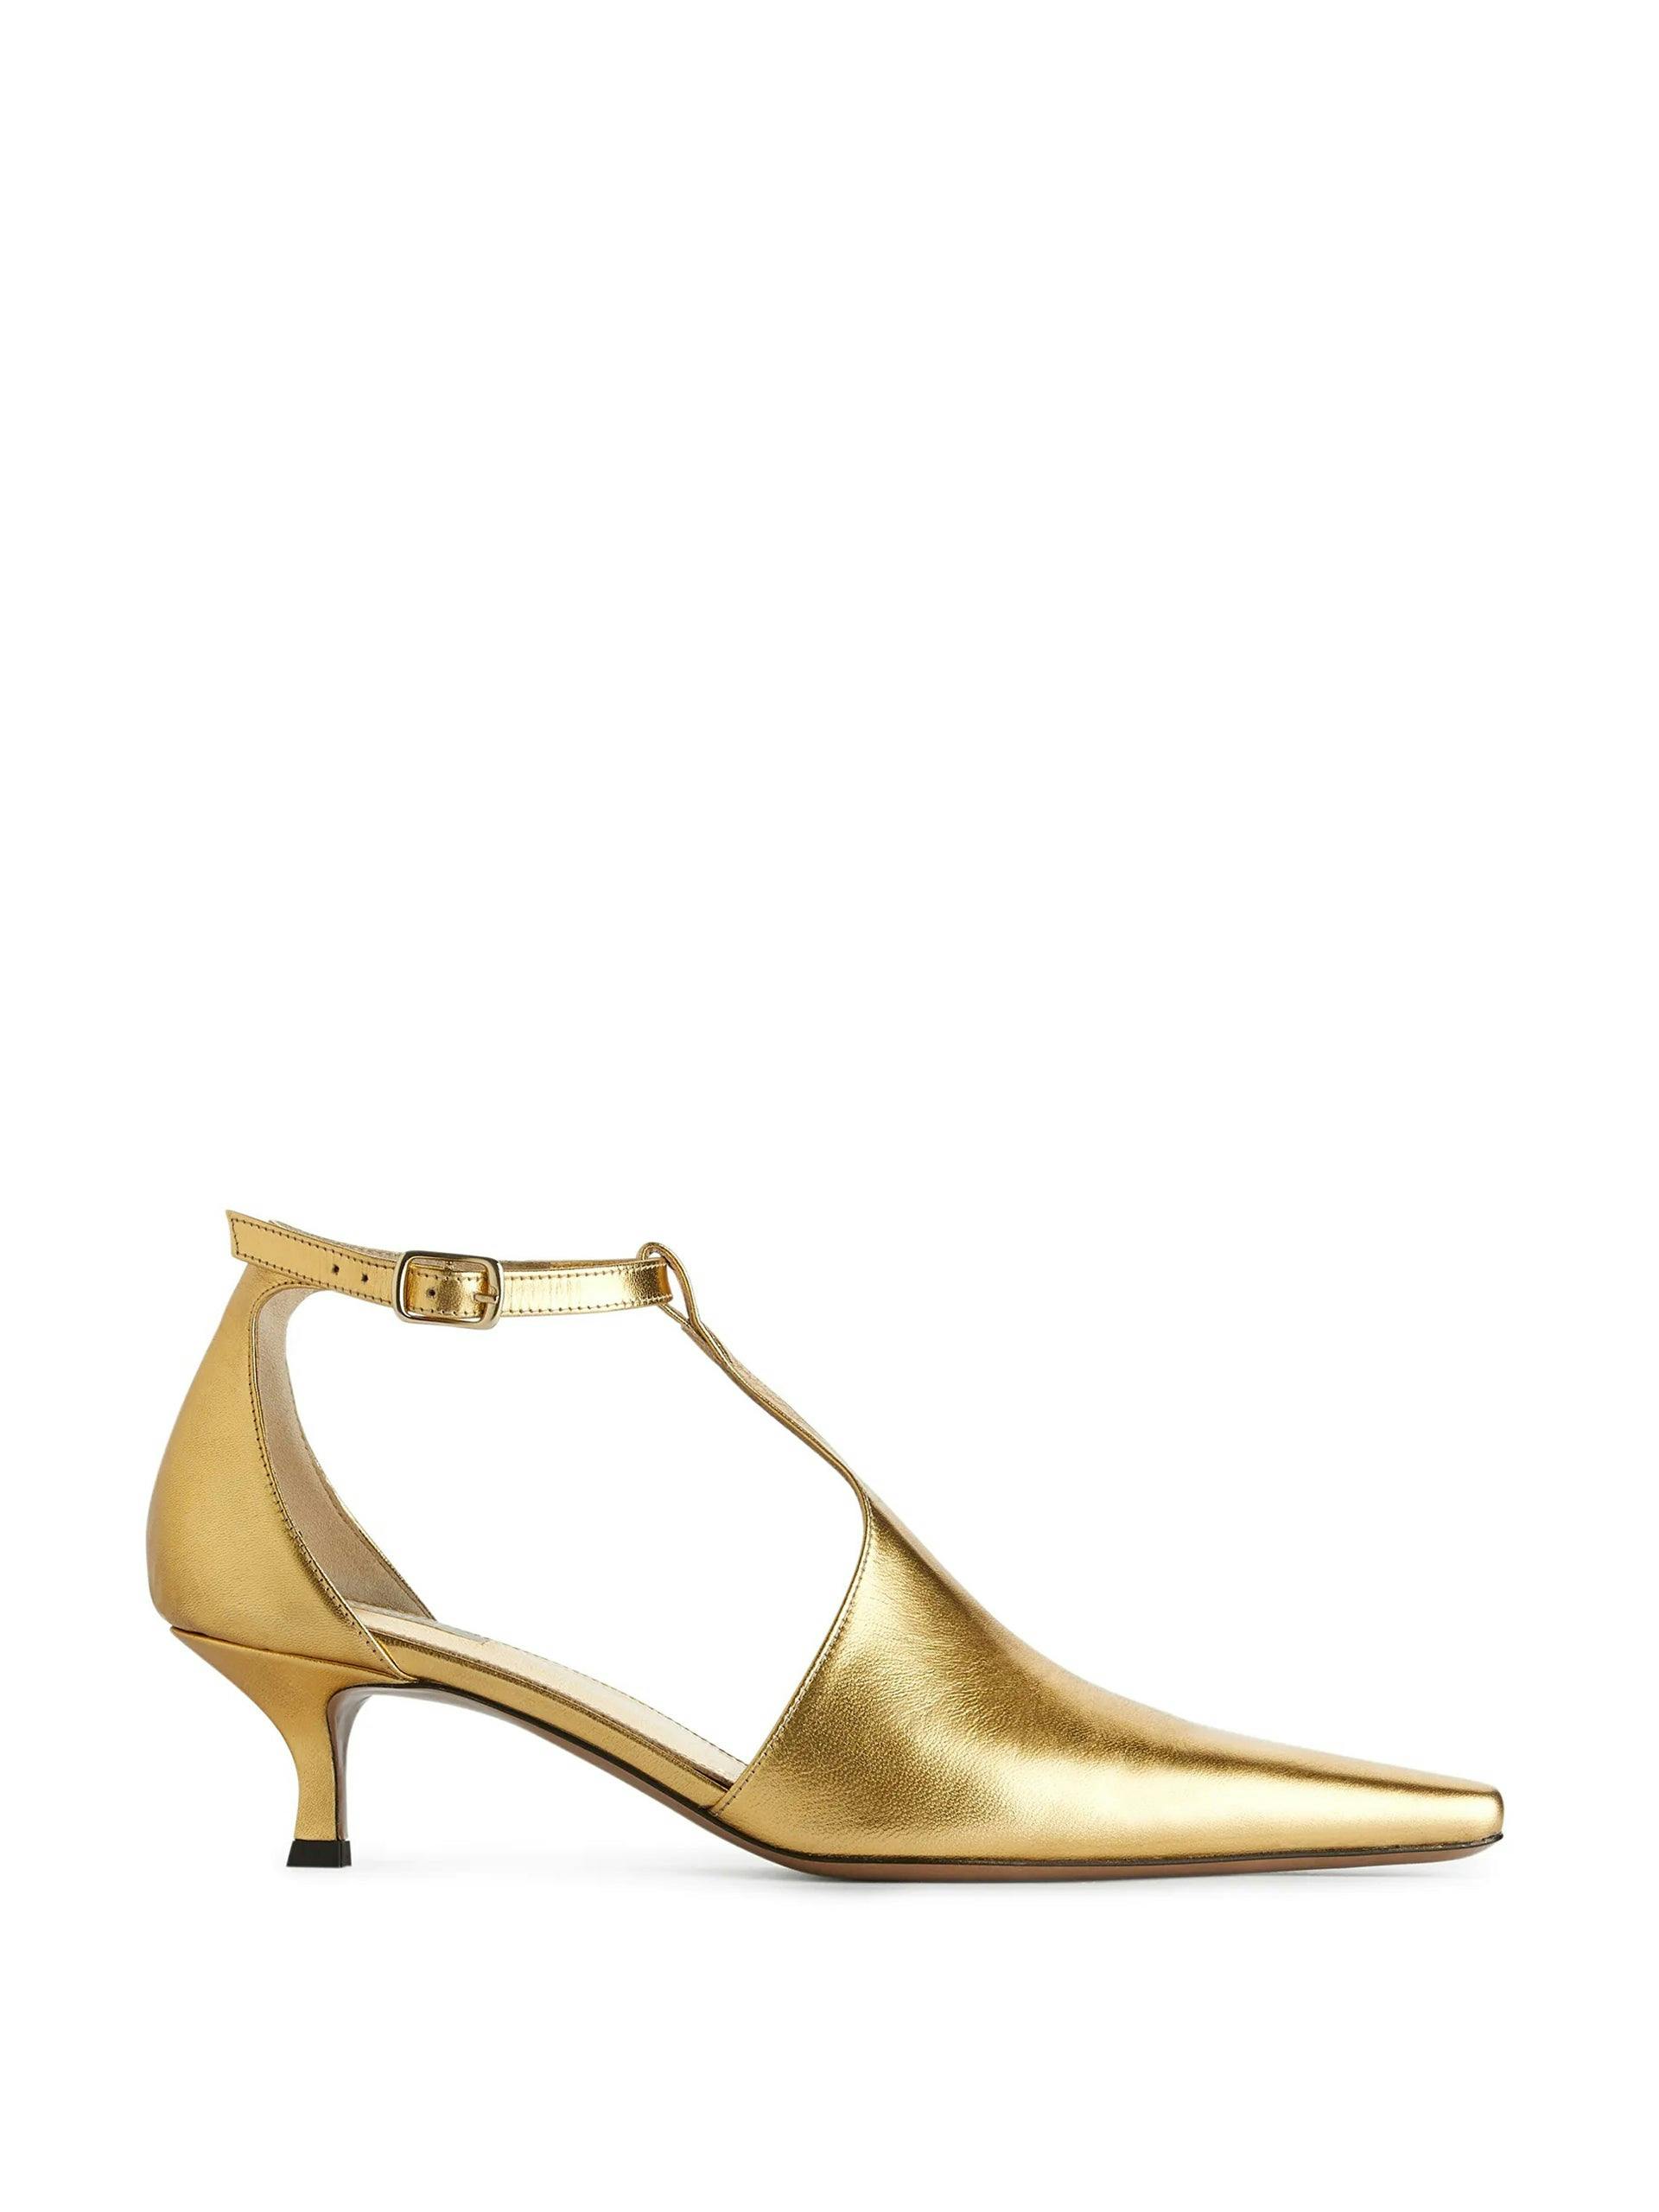 Gold kitten heel shoes